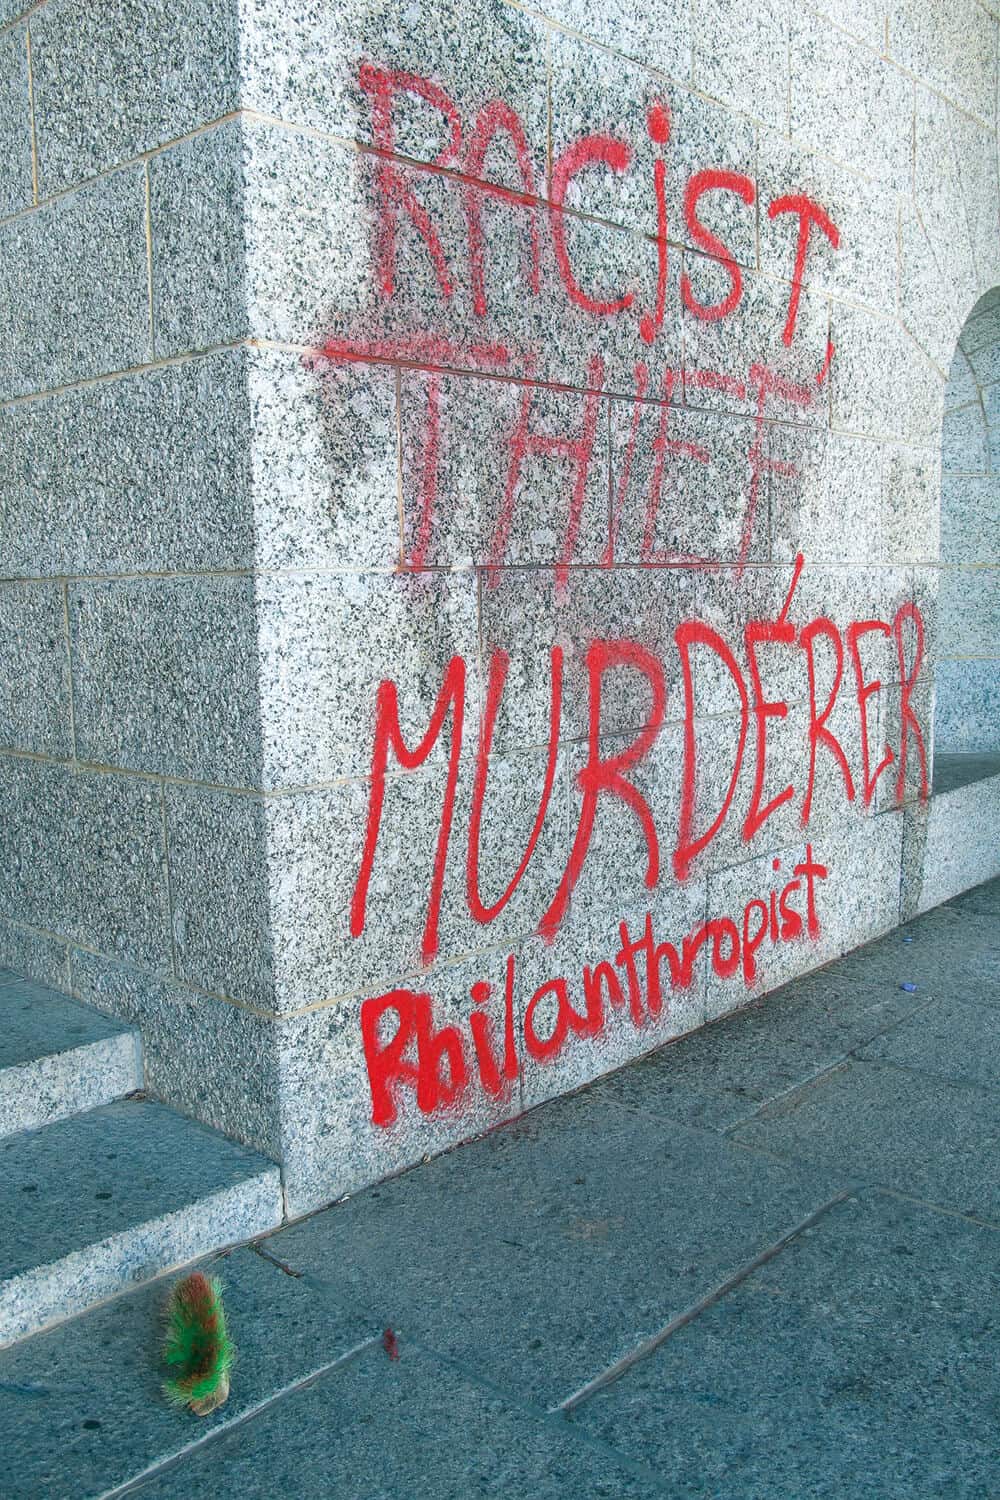 "Racist, Thief, Murderer, Philanthropist" read graffiti at Rhodes Memorial in Cape Town. Photograph: Kim Gurney